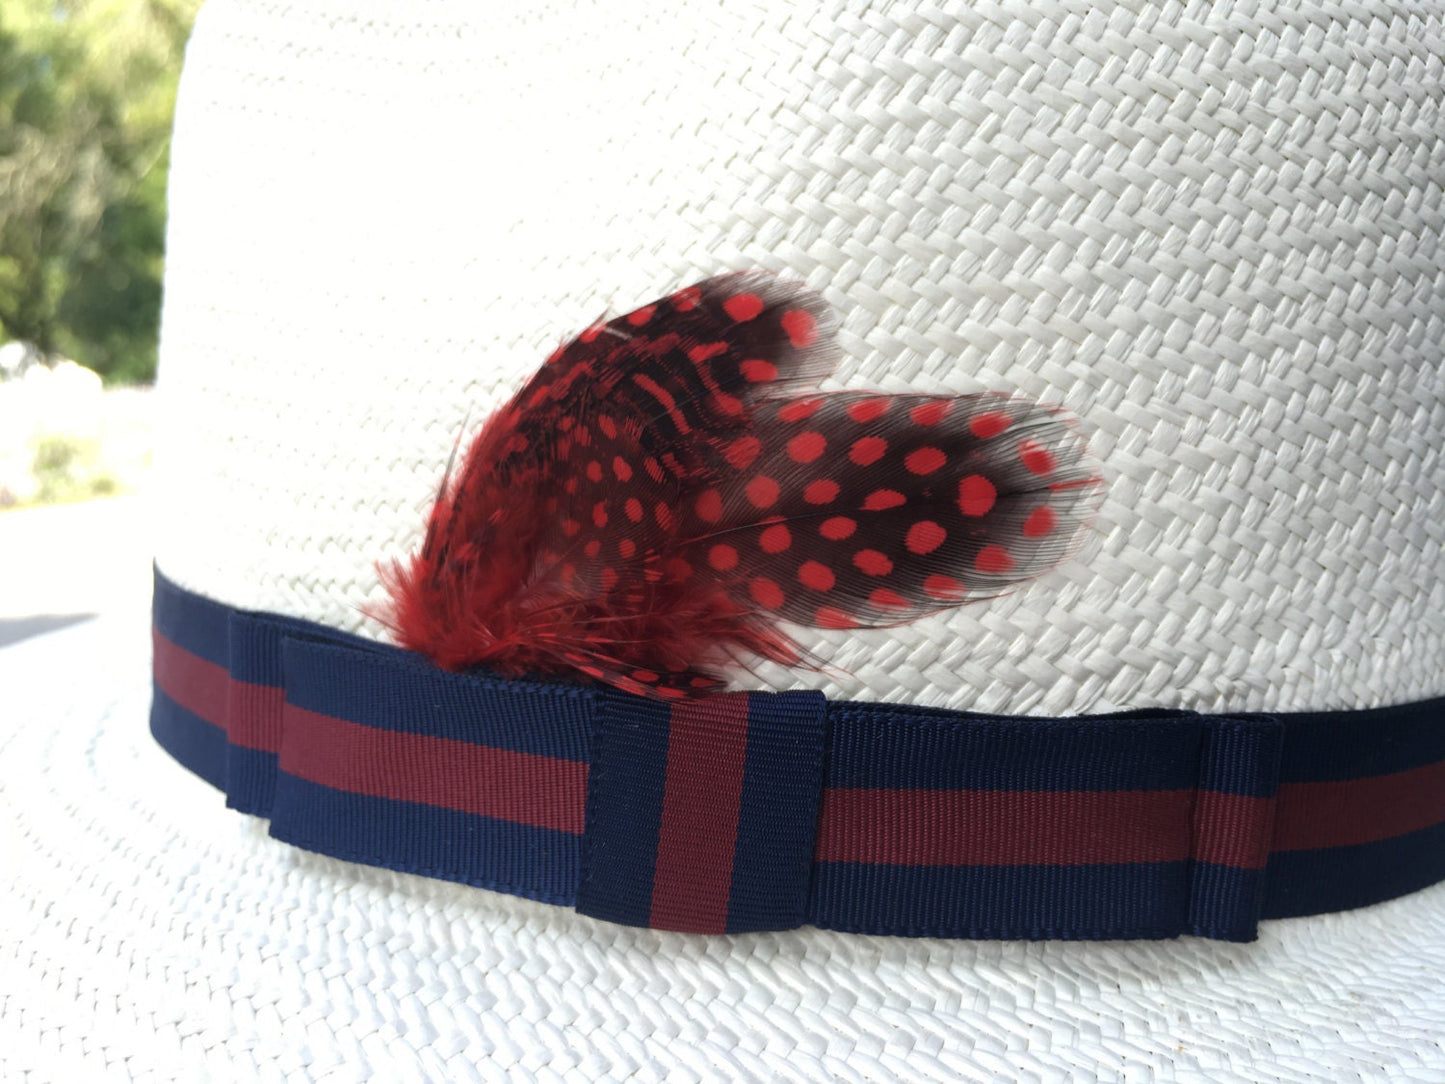 Soft Straw Fedora- Unisex Hat-Summer Straw Hat- Ecuadorian Straw Hat- Mens Straw Hat- Custom Made Hat- Ladies Fedora- Summer Hat- Casual Hat